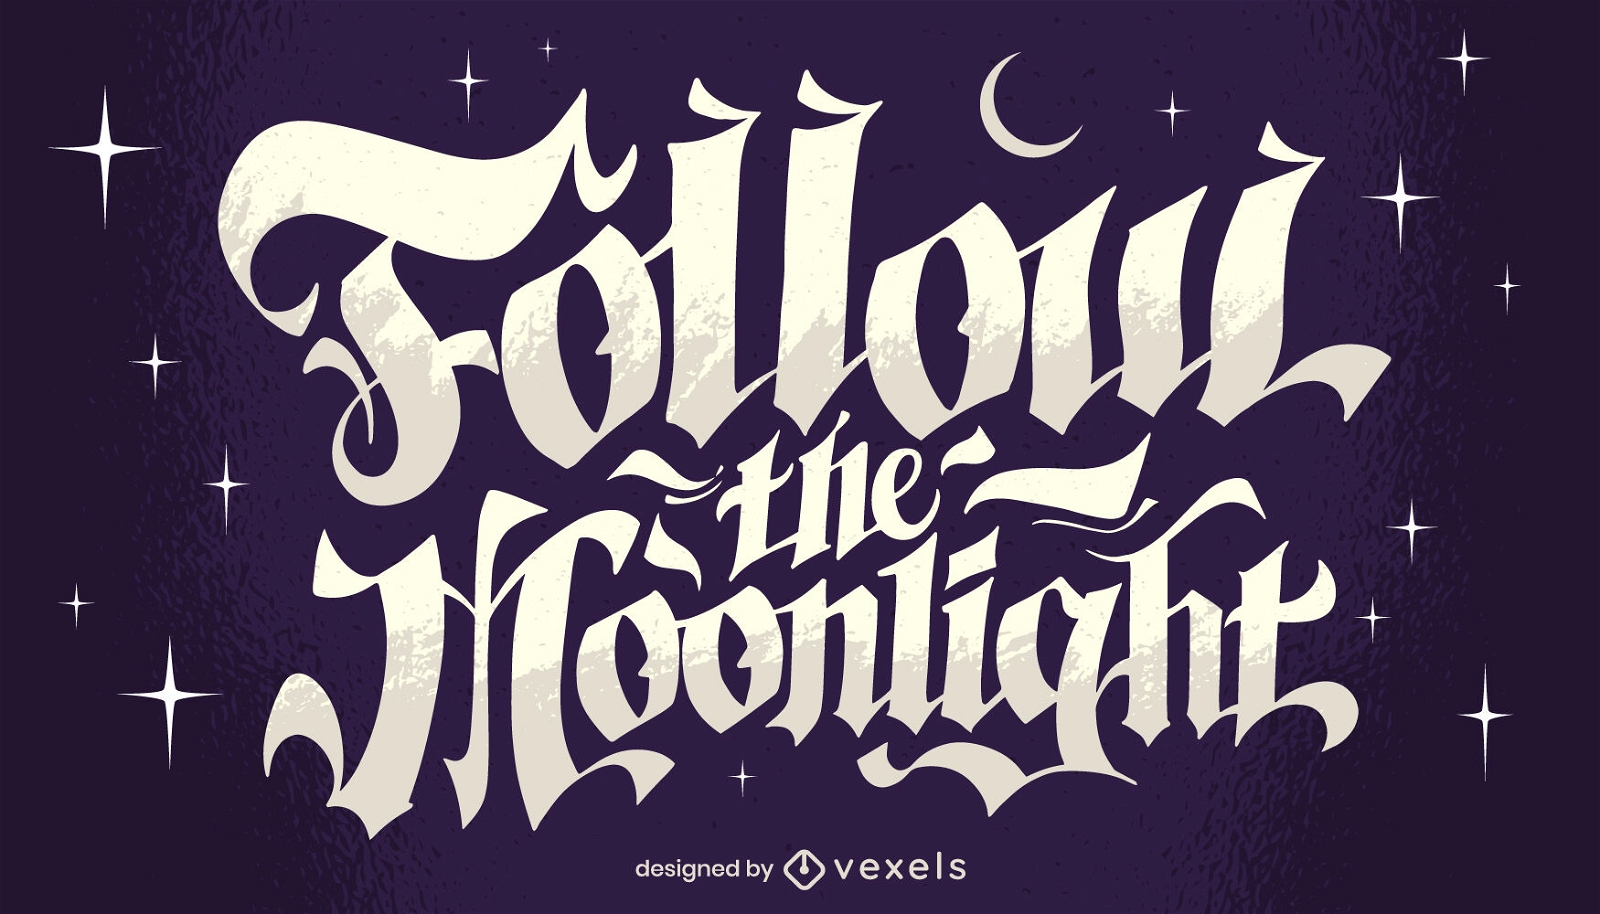 Follow the moonlight quote illustration